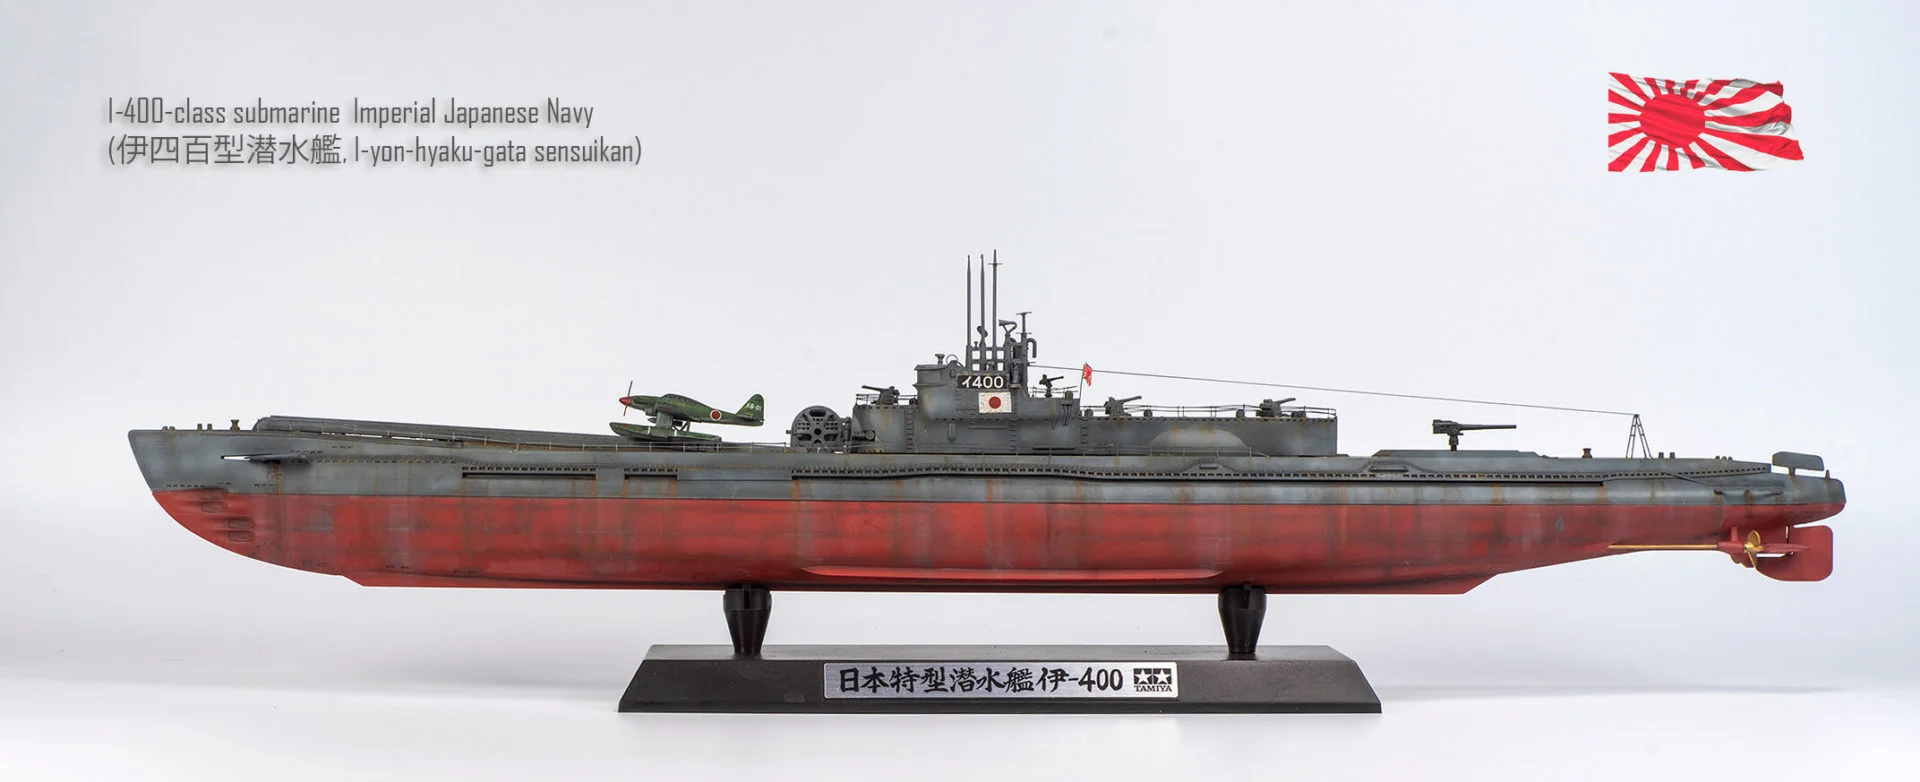 1/350 I-400-class Imperial Japanese Navy submarine 伊四百型潜水艦 